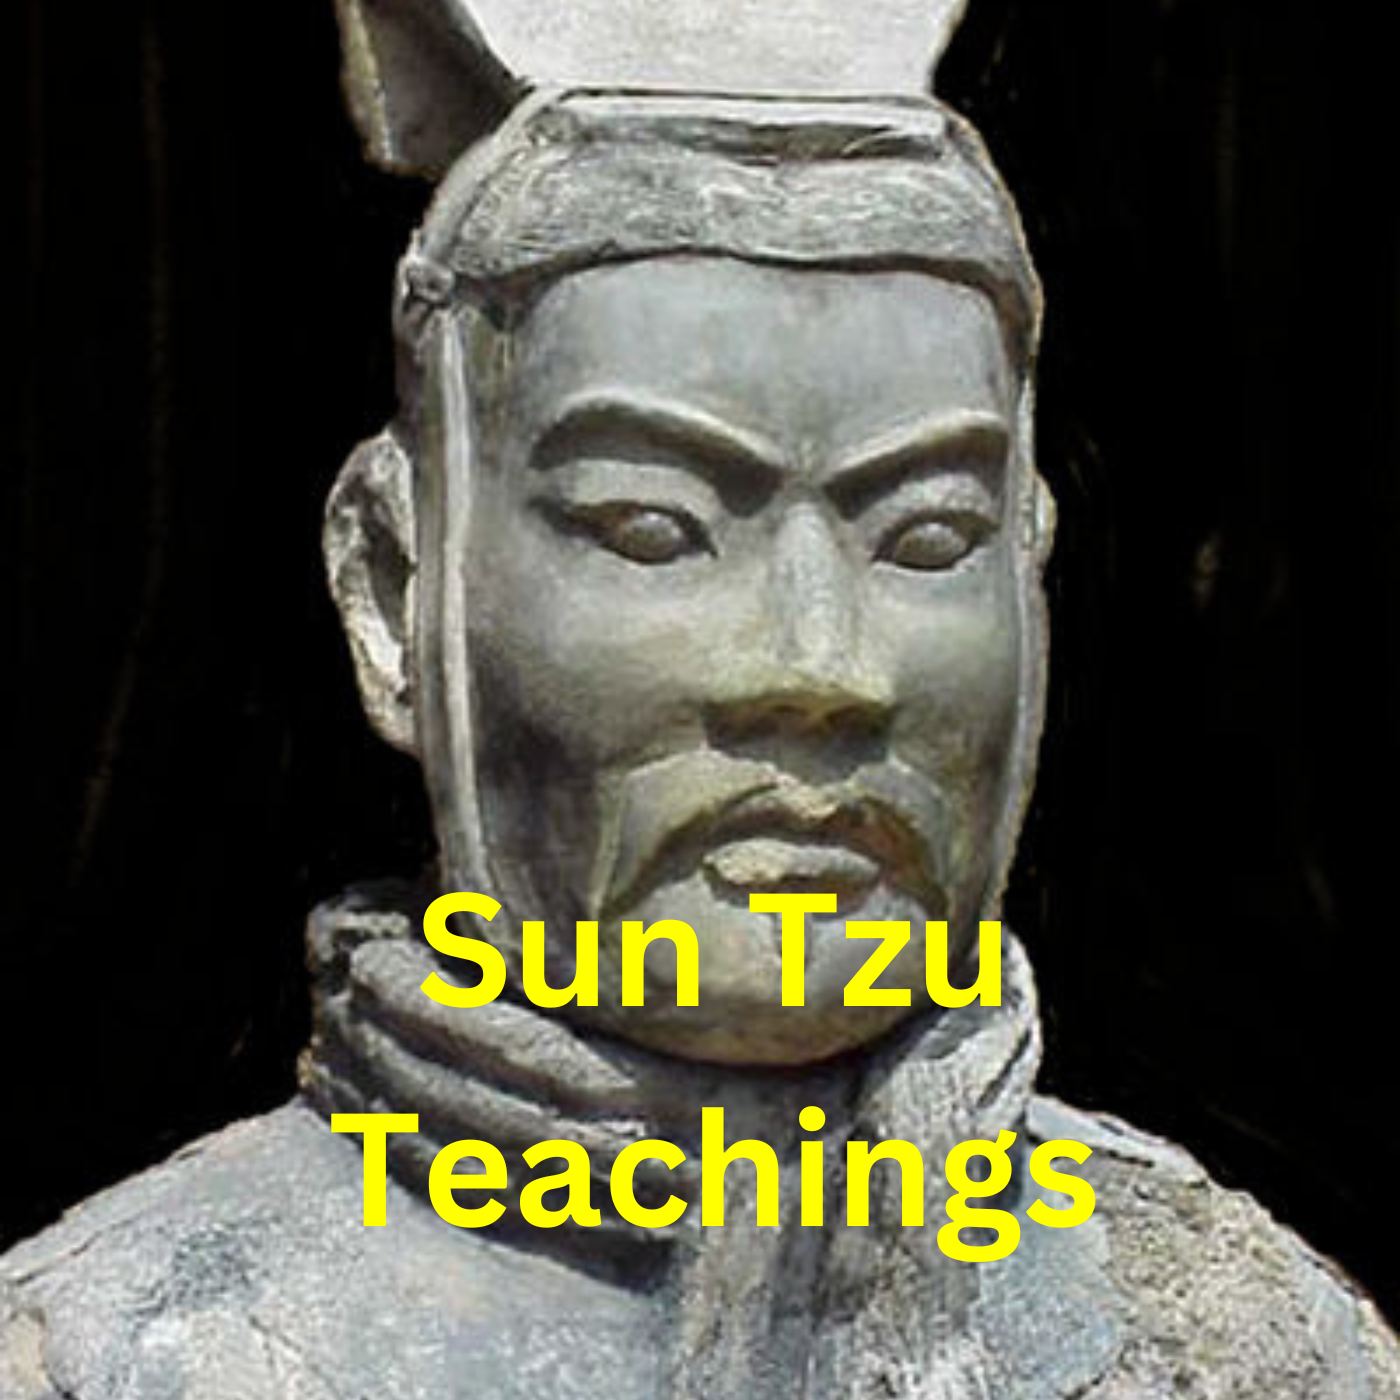 * Sun Tzu Teachings